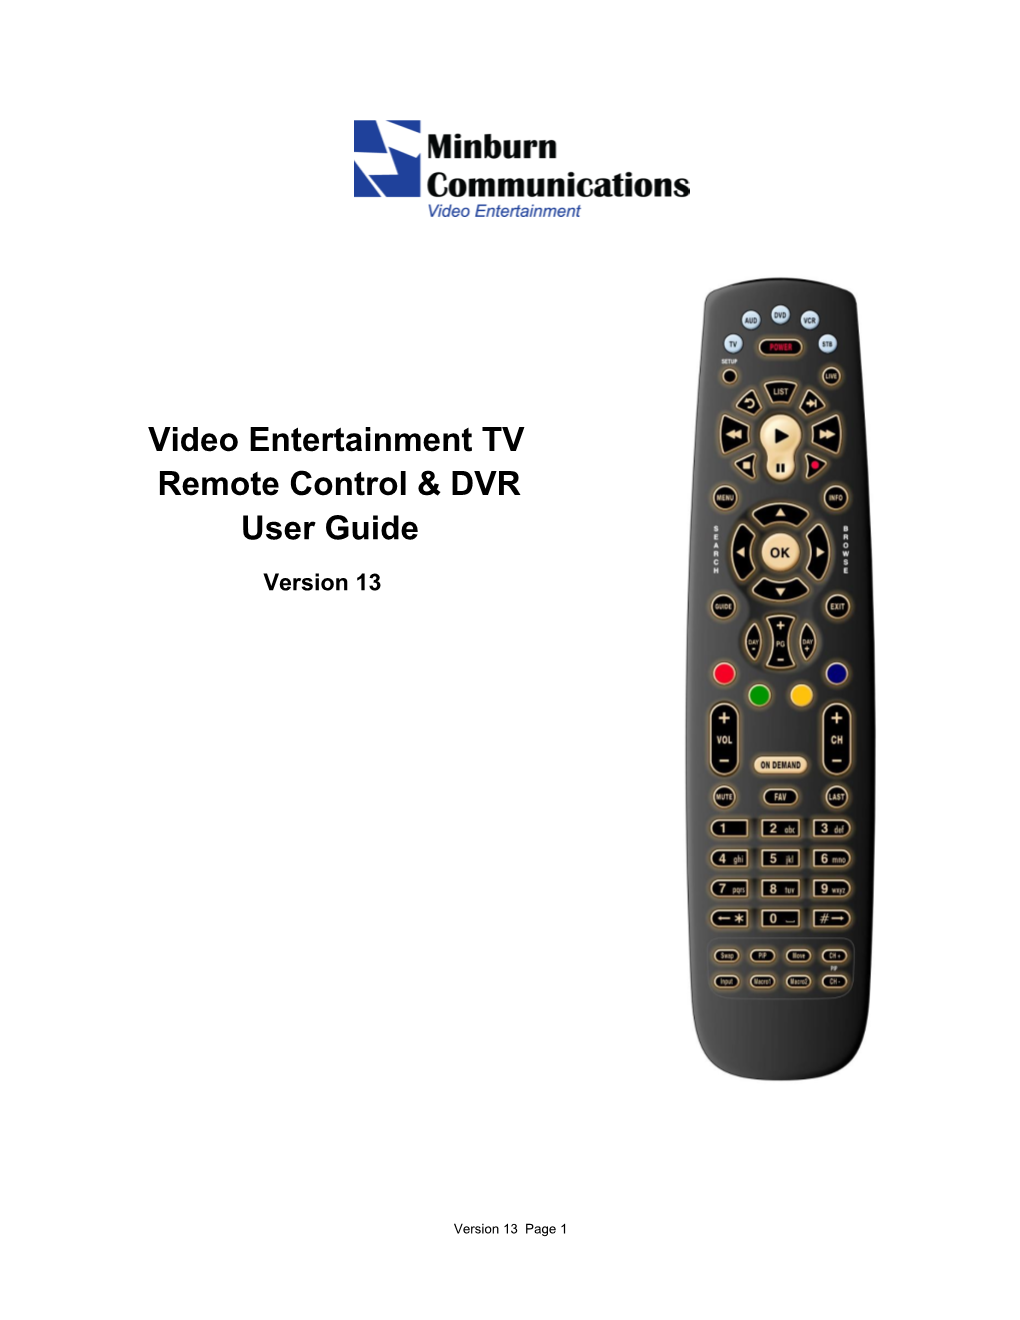 Video Entertainment TV Remote Control & DVR User Guide